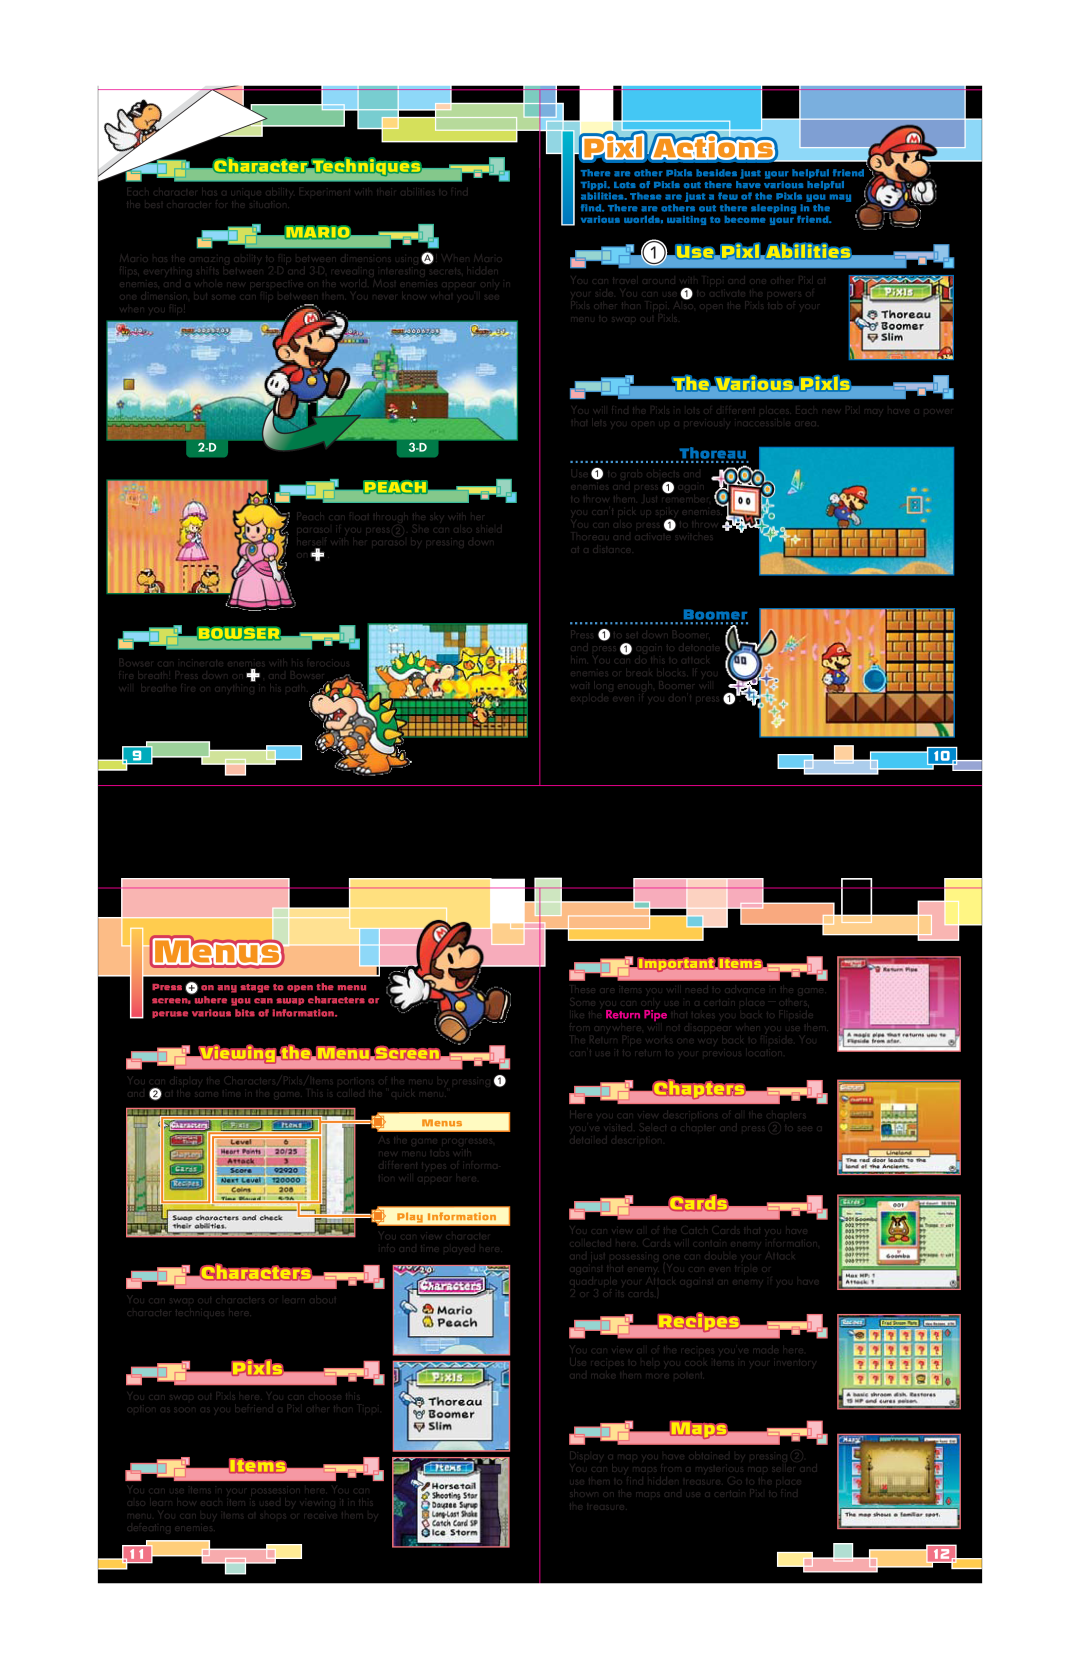 Nintendo 45496902629 Menus, Pixl Actions, The Various Pixls, Use Pixl Abilities, Maps, Items, Character Techniques, Mario 